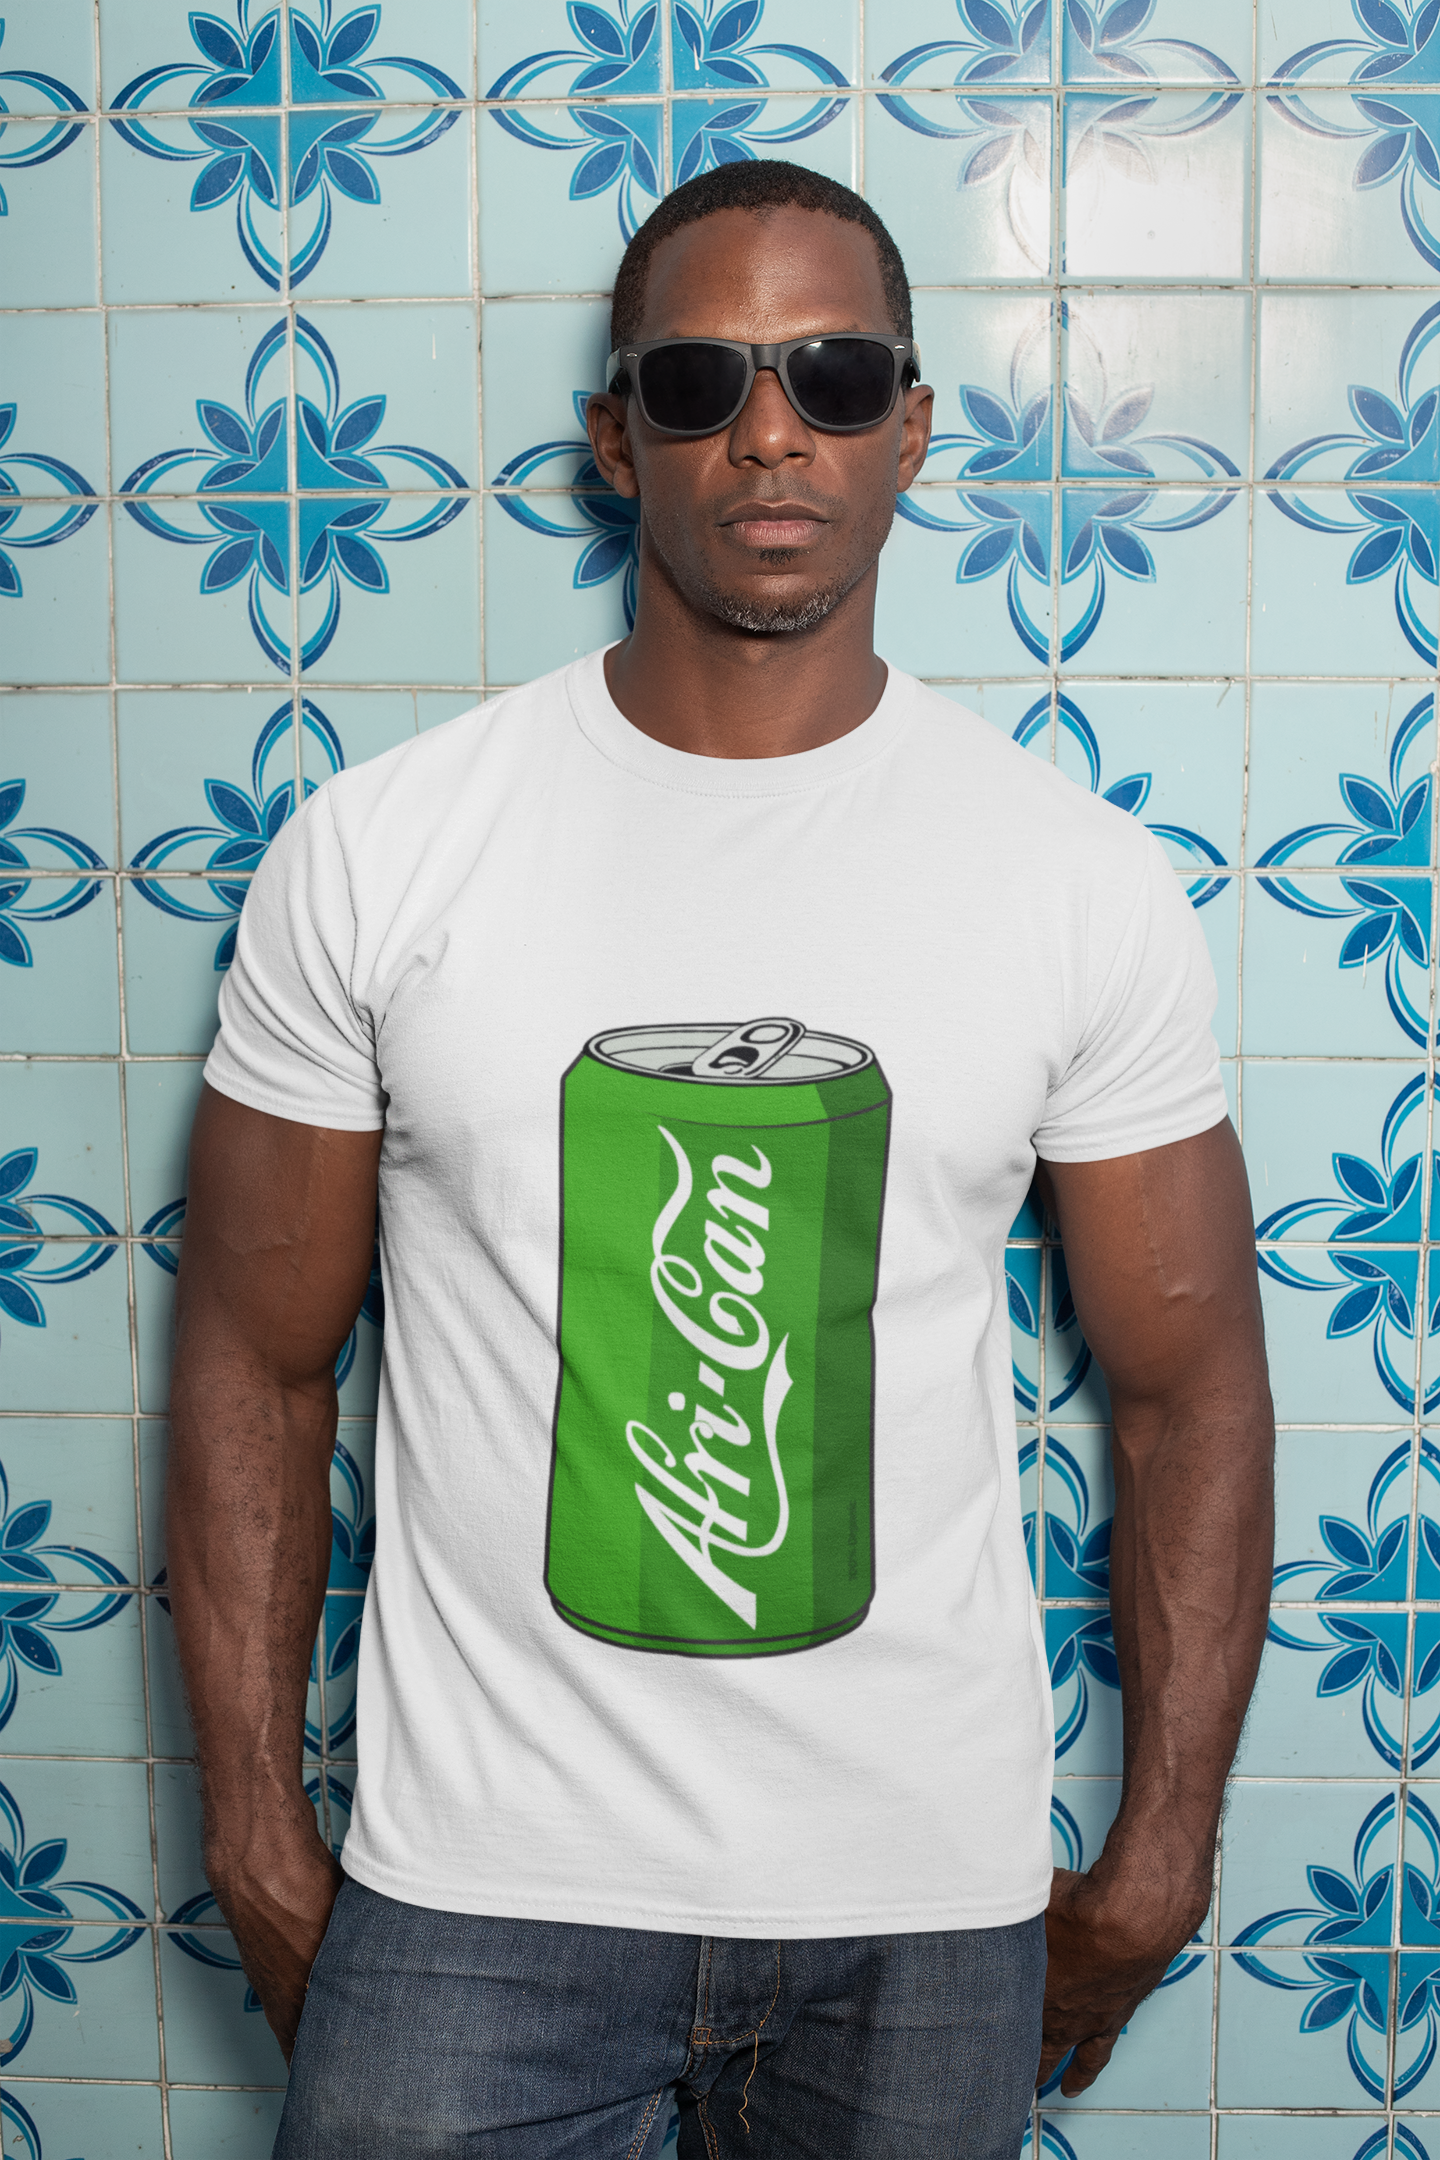 "Afri-Can" (Soda) Organic Cotton T-Shirt - White